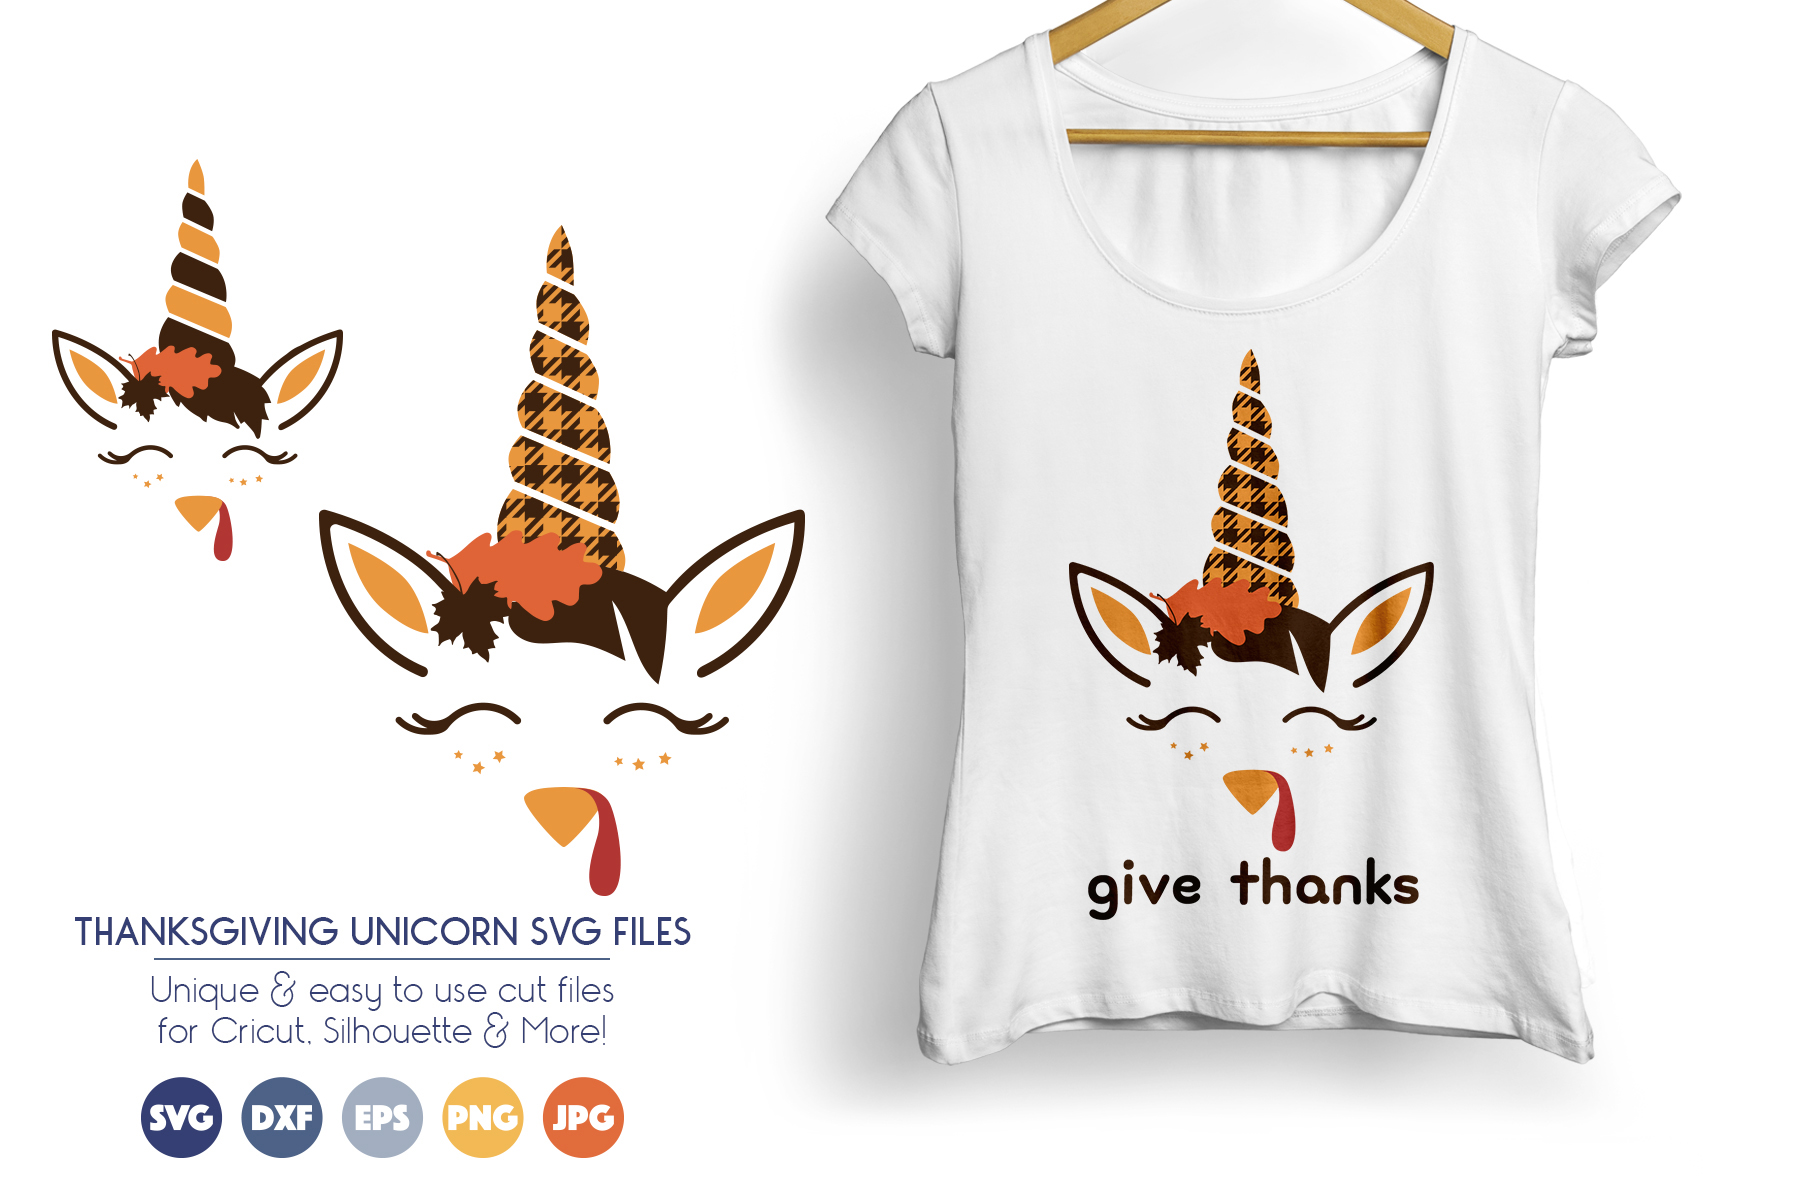 Download Thanksgiving Unicorn SVG Files, Turkey Unicorn Buffalo Plaid